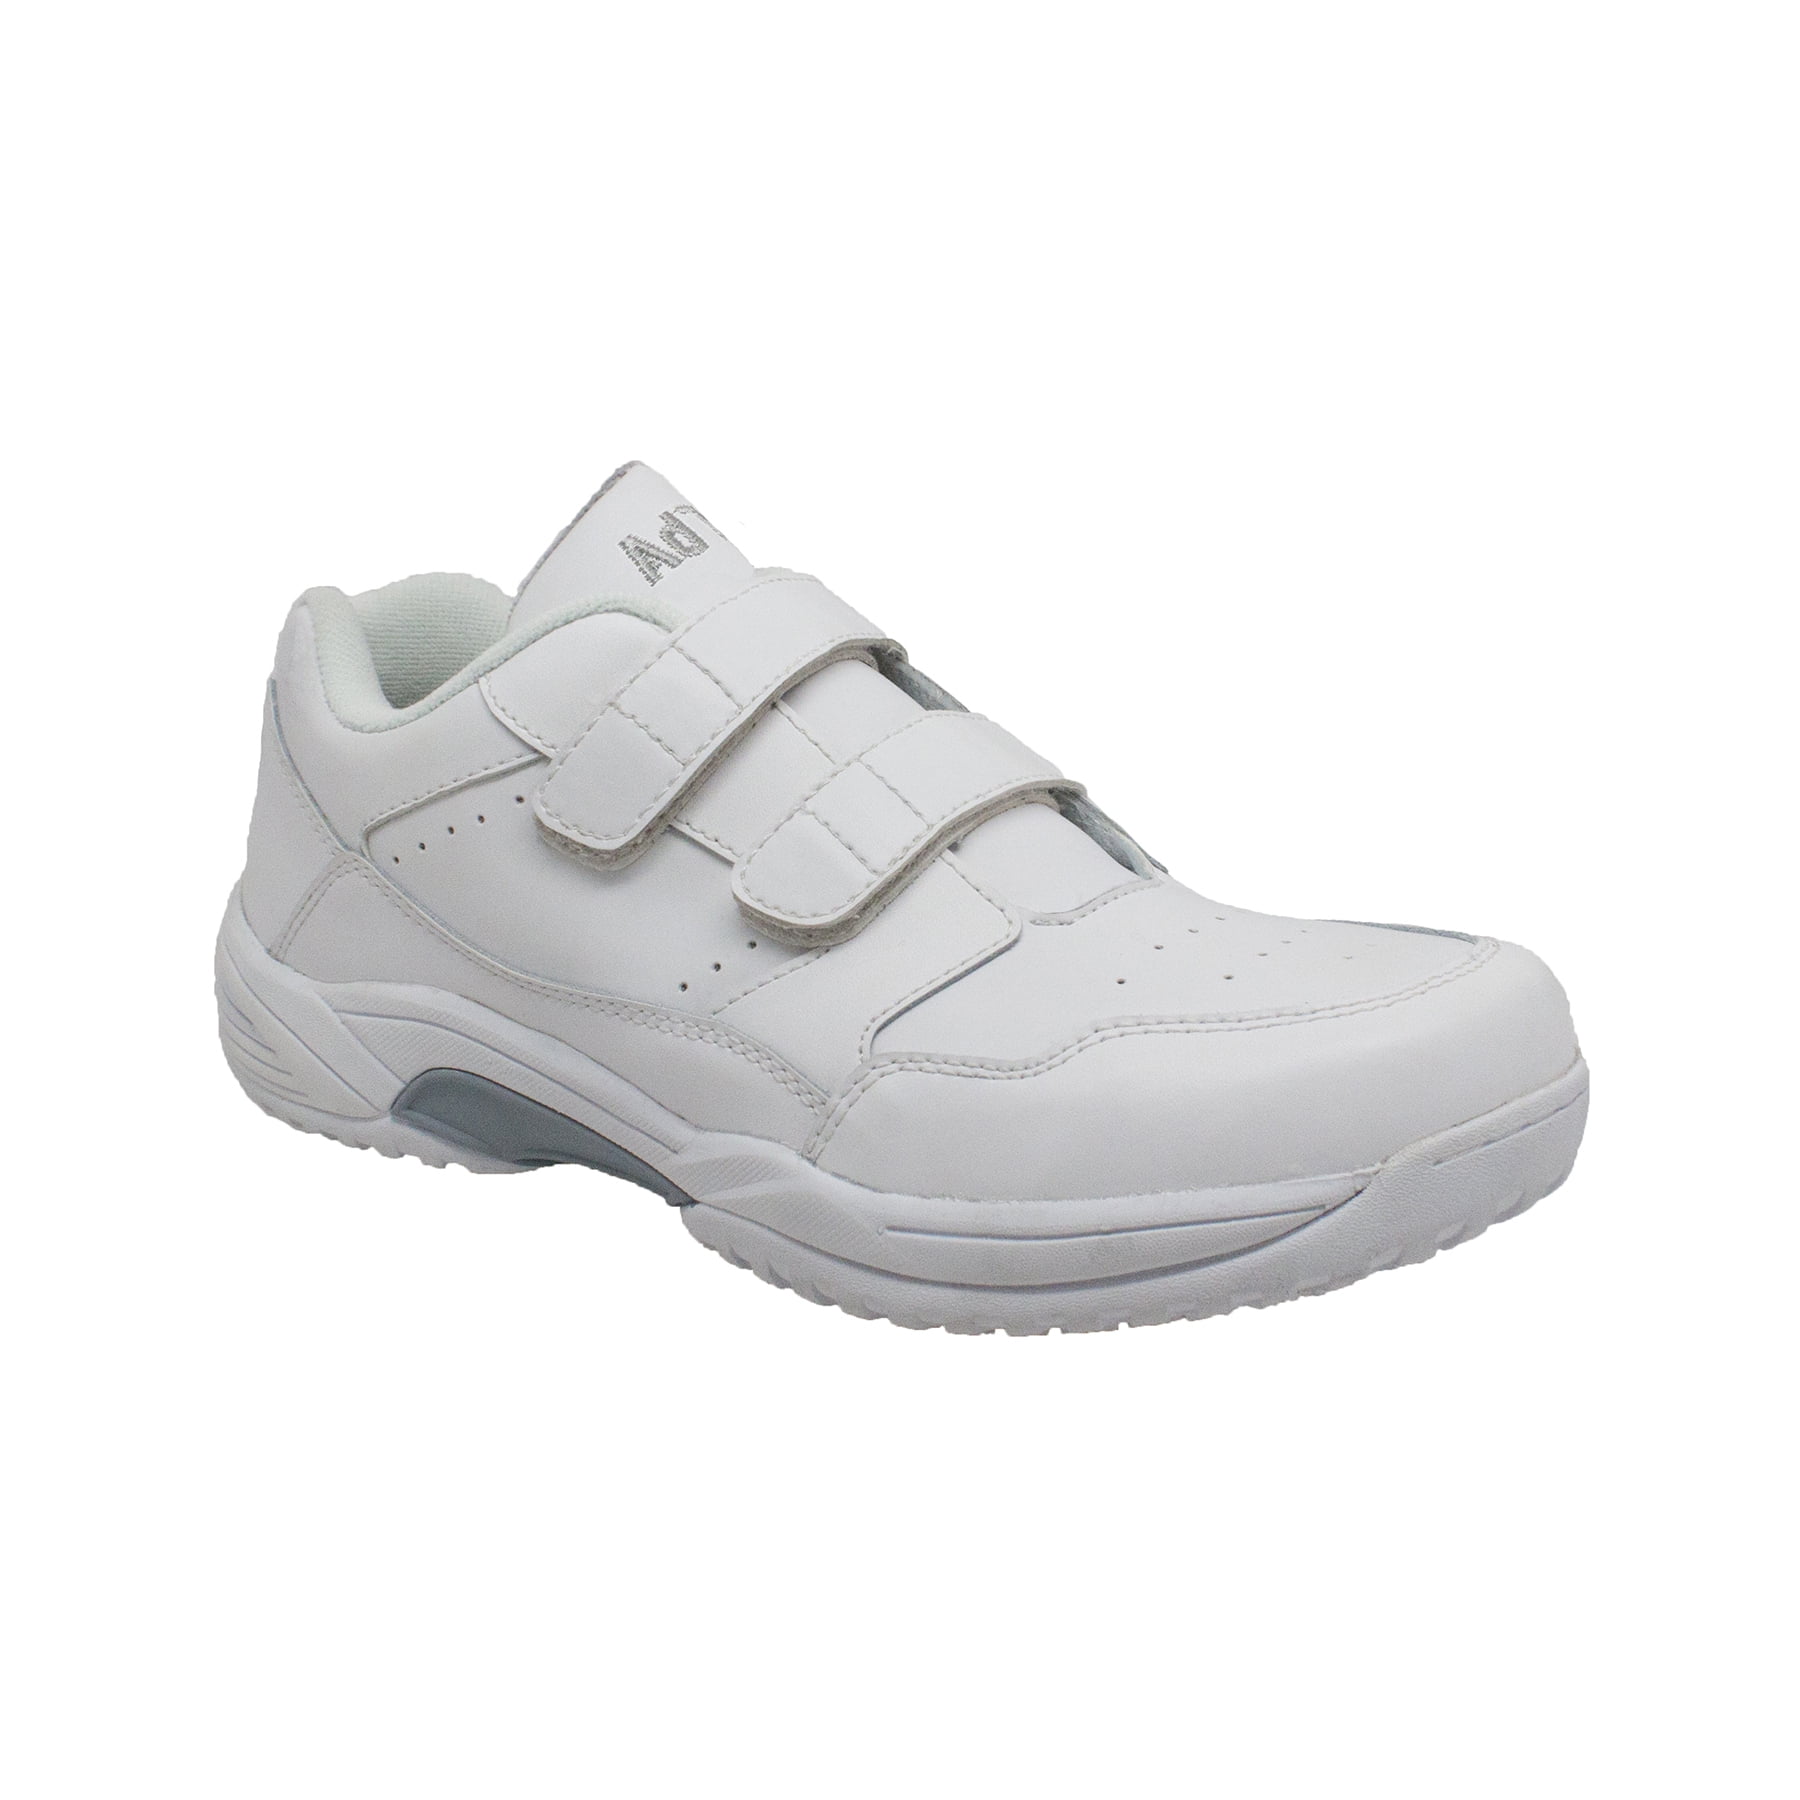 mens velcro tennis shoes white